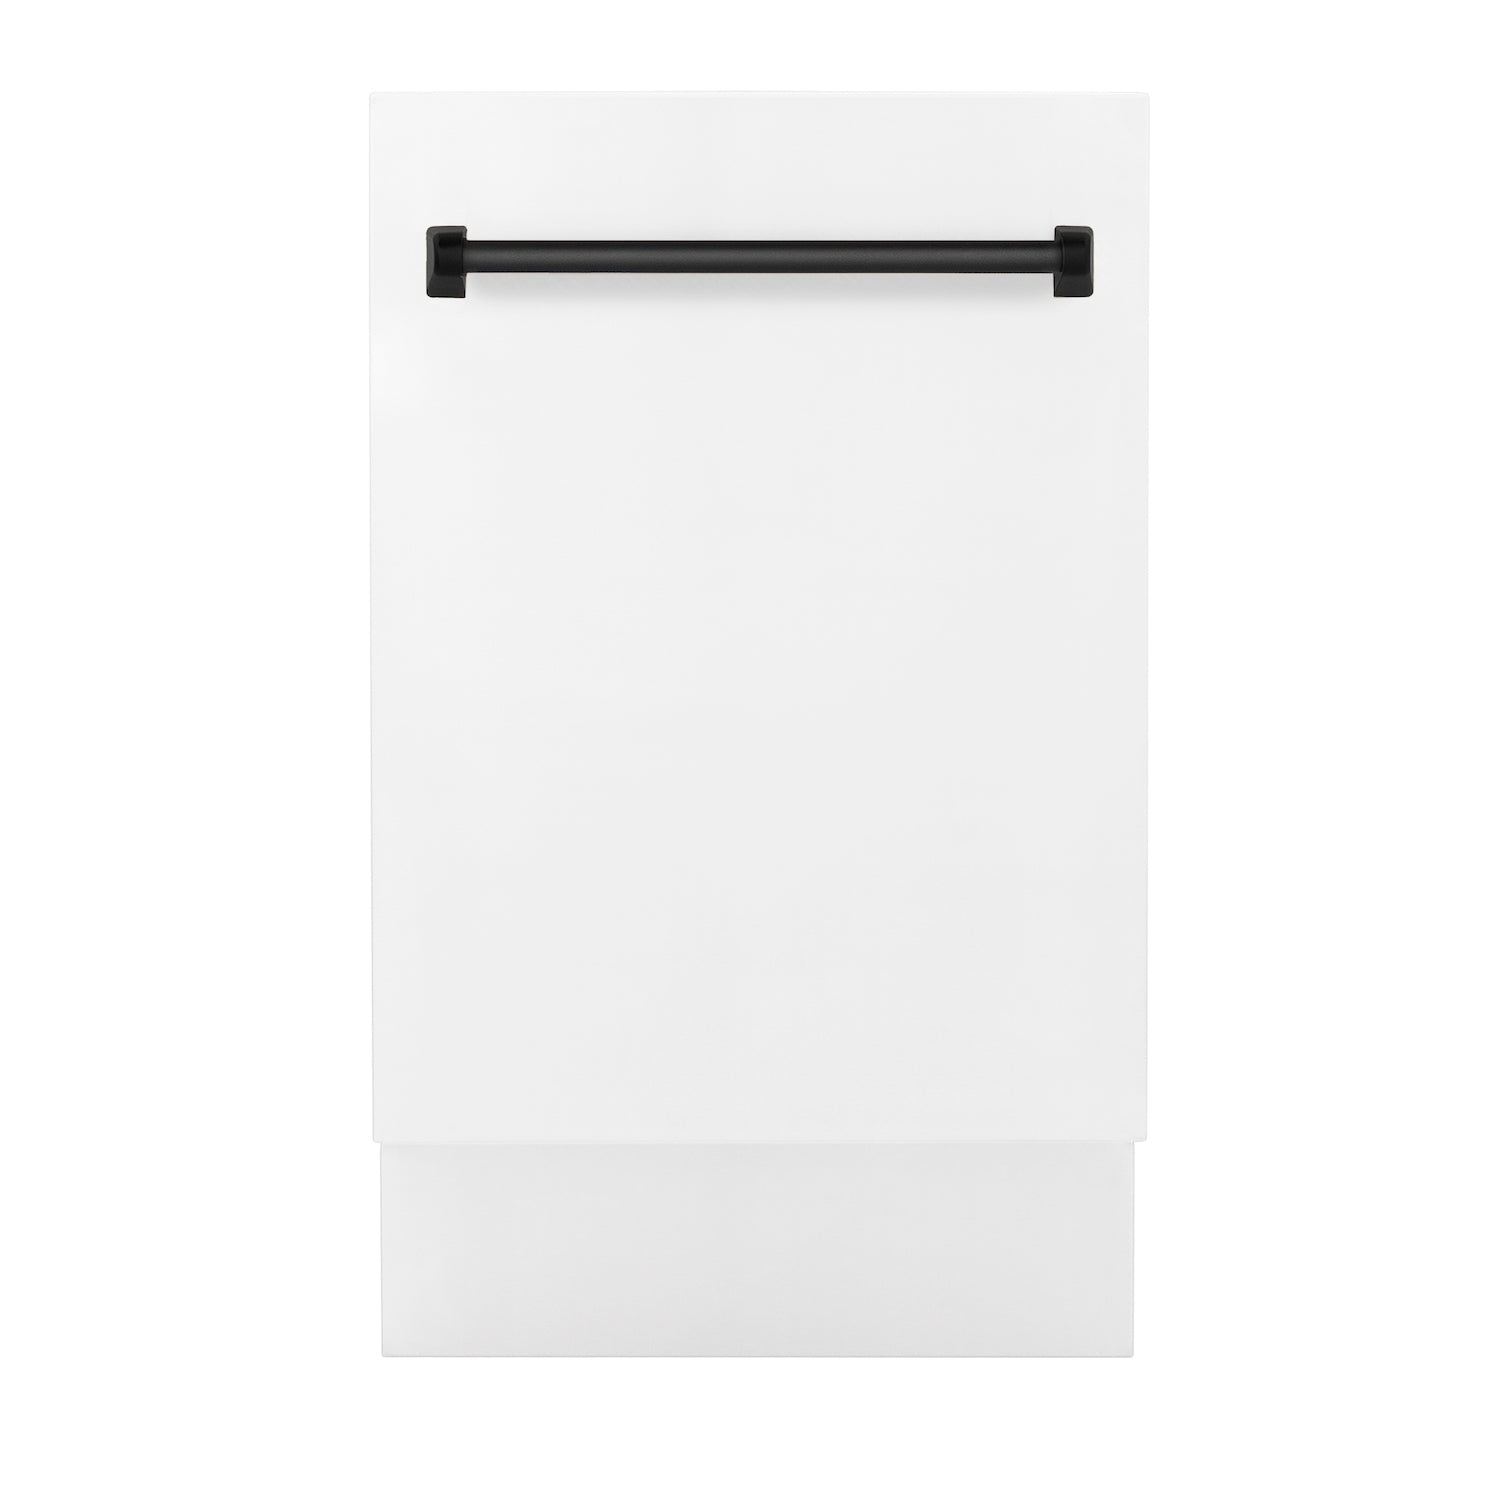 ZLINE Autograph Edition 18” Compact 3rd Rack Top Control Dishwasher in White Matte with Matte Black Accent Handle, 51dBa (DWVZ-WM-18-MB)